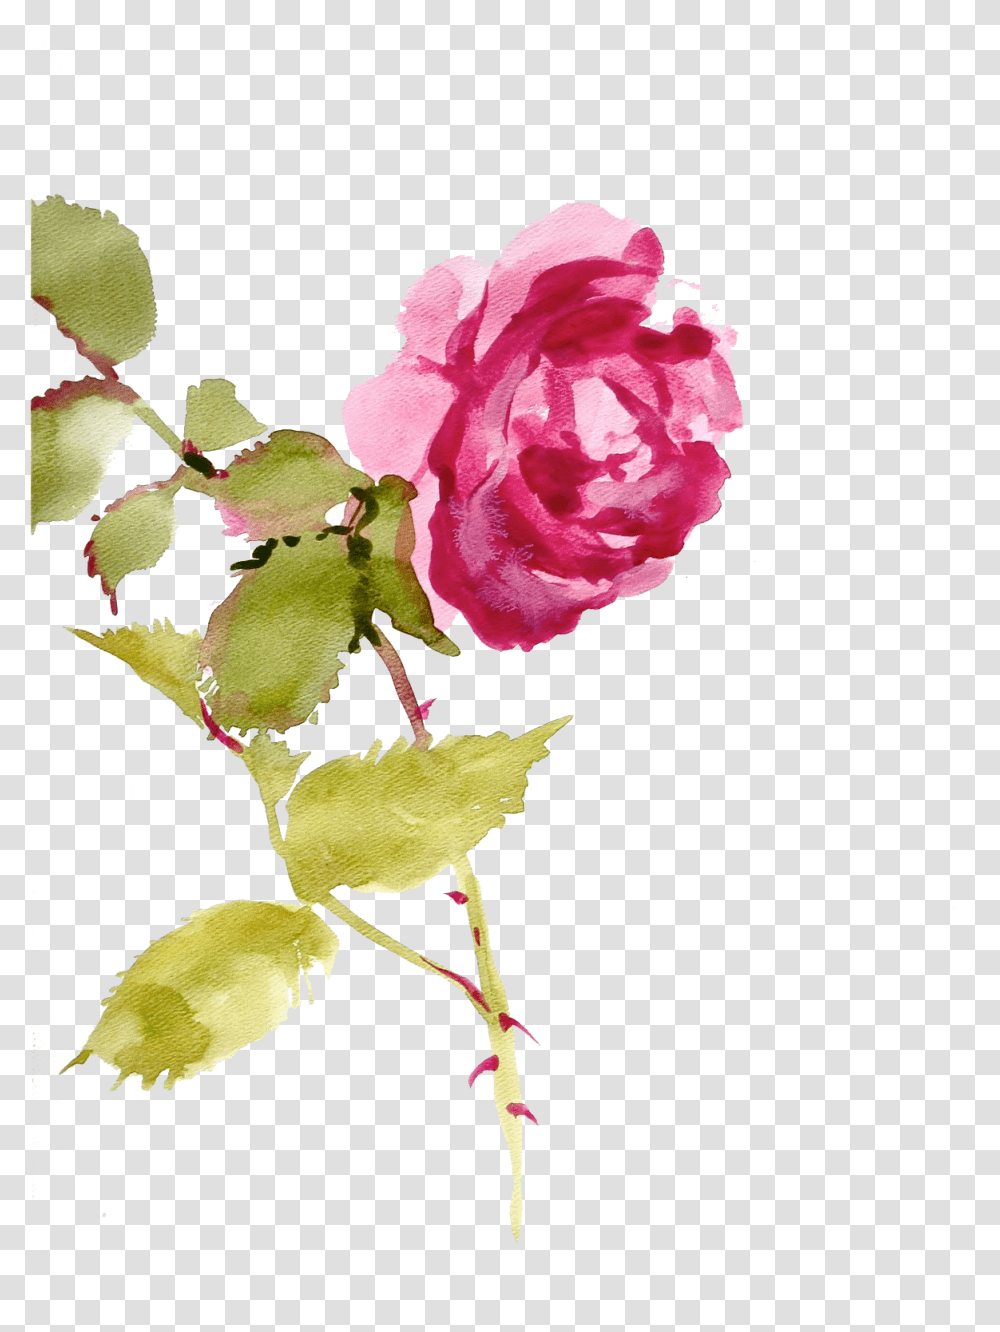 Jaehos Tumblr Com Post Texture Pack Watercolor Painting, Rose, Flower, Plant, Blossom Transparent Png